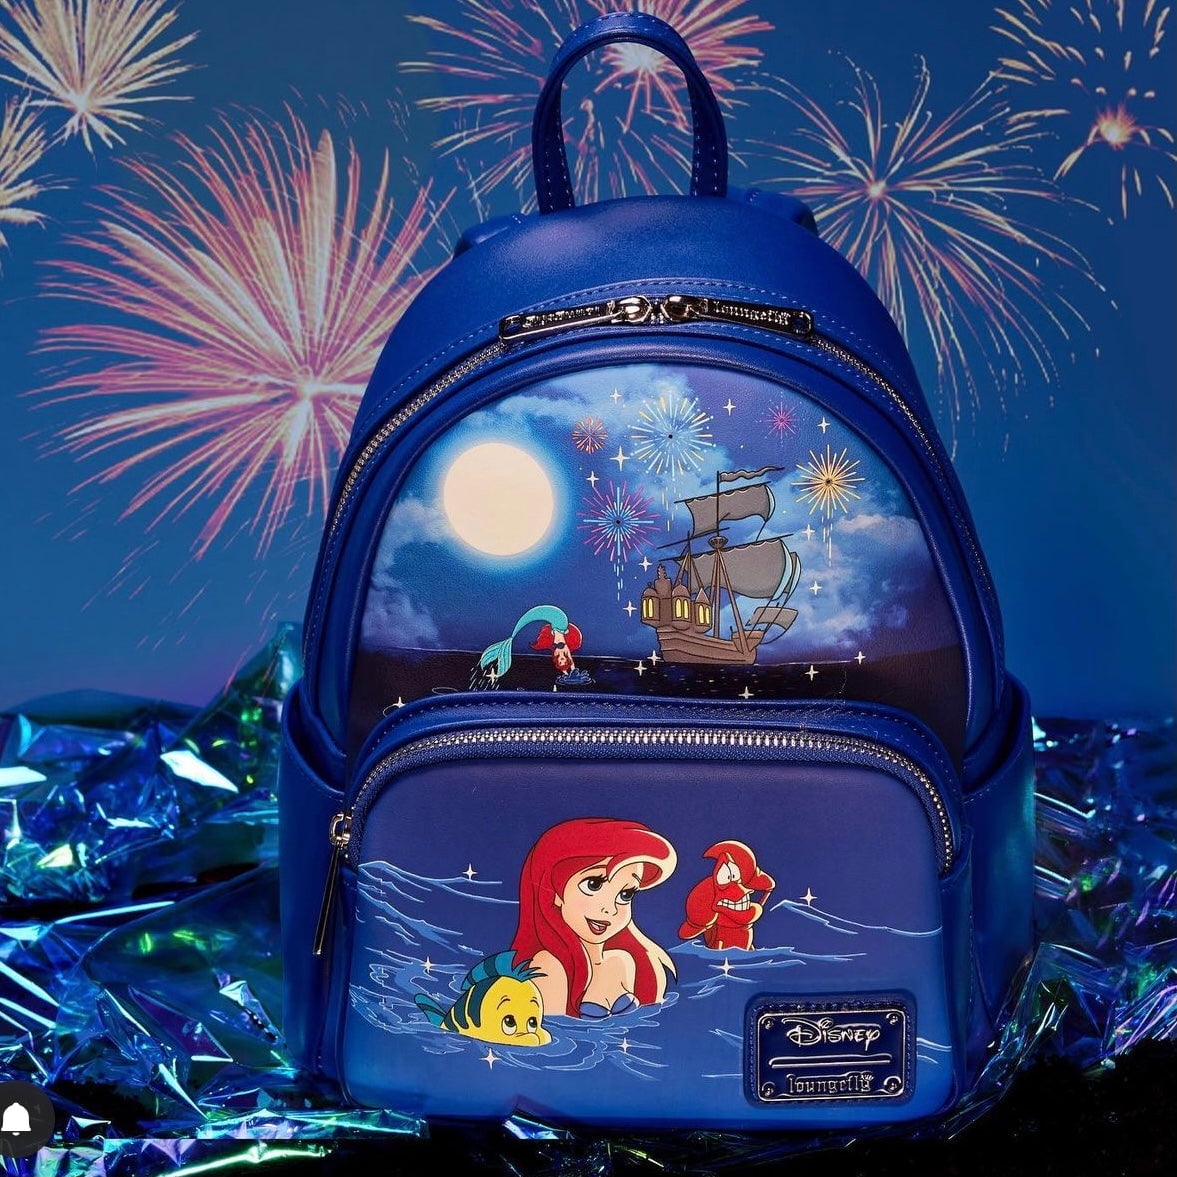 Loungefly The Little Mermaid Ariel Fireworks Mini Backpack, Multi